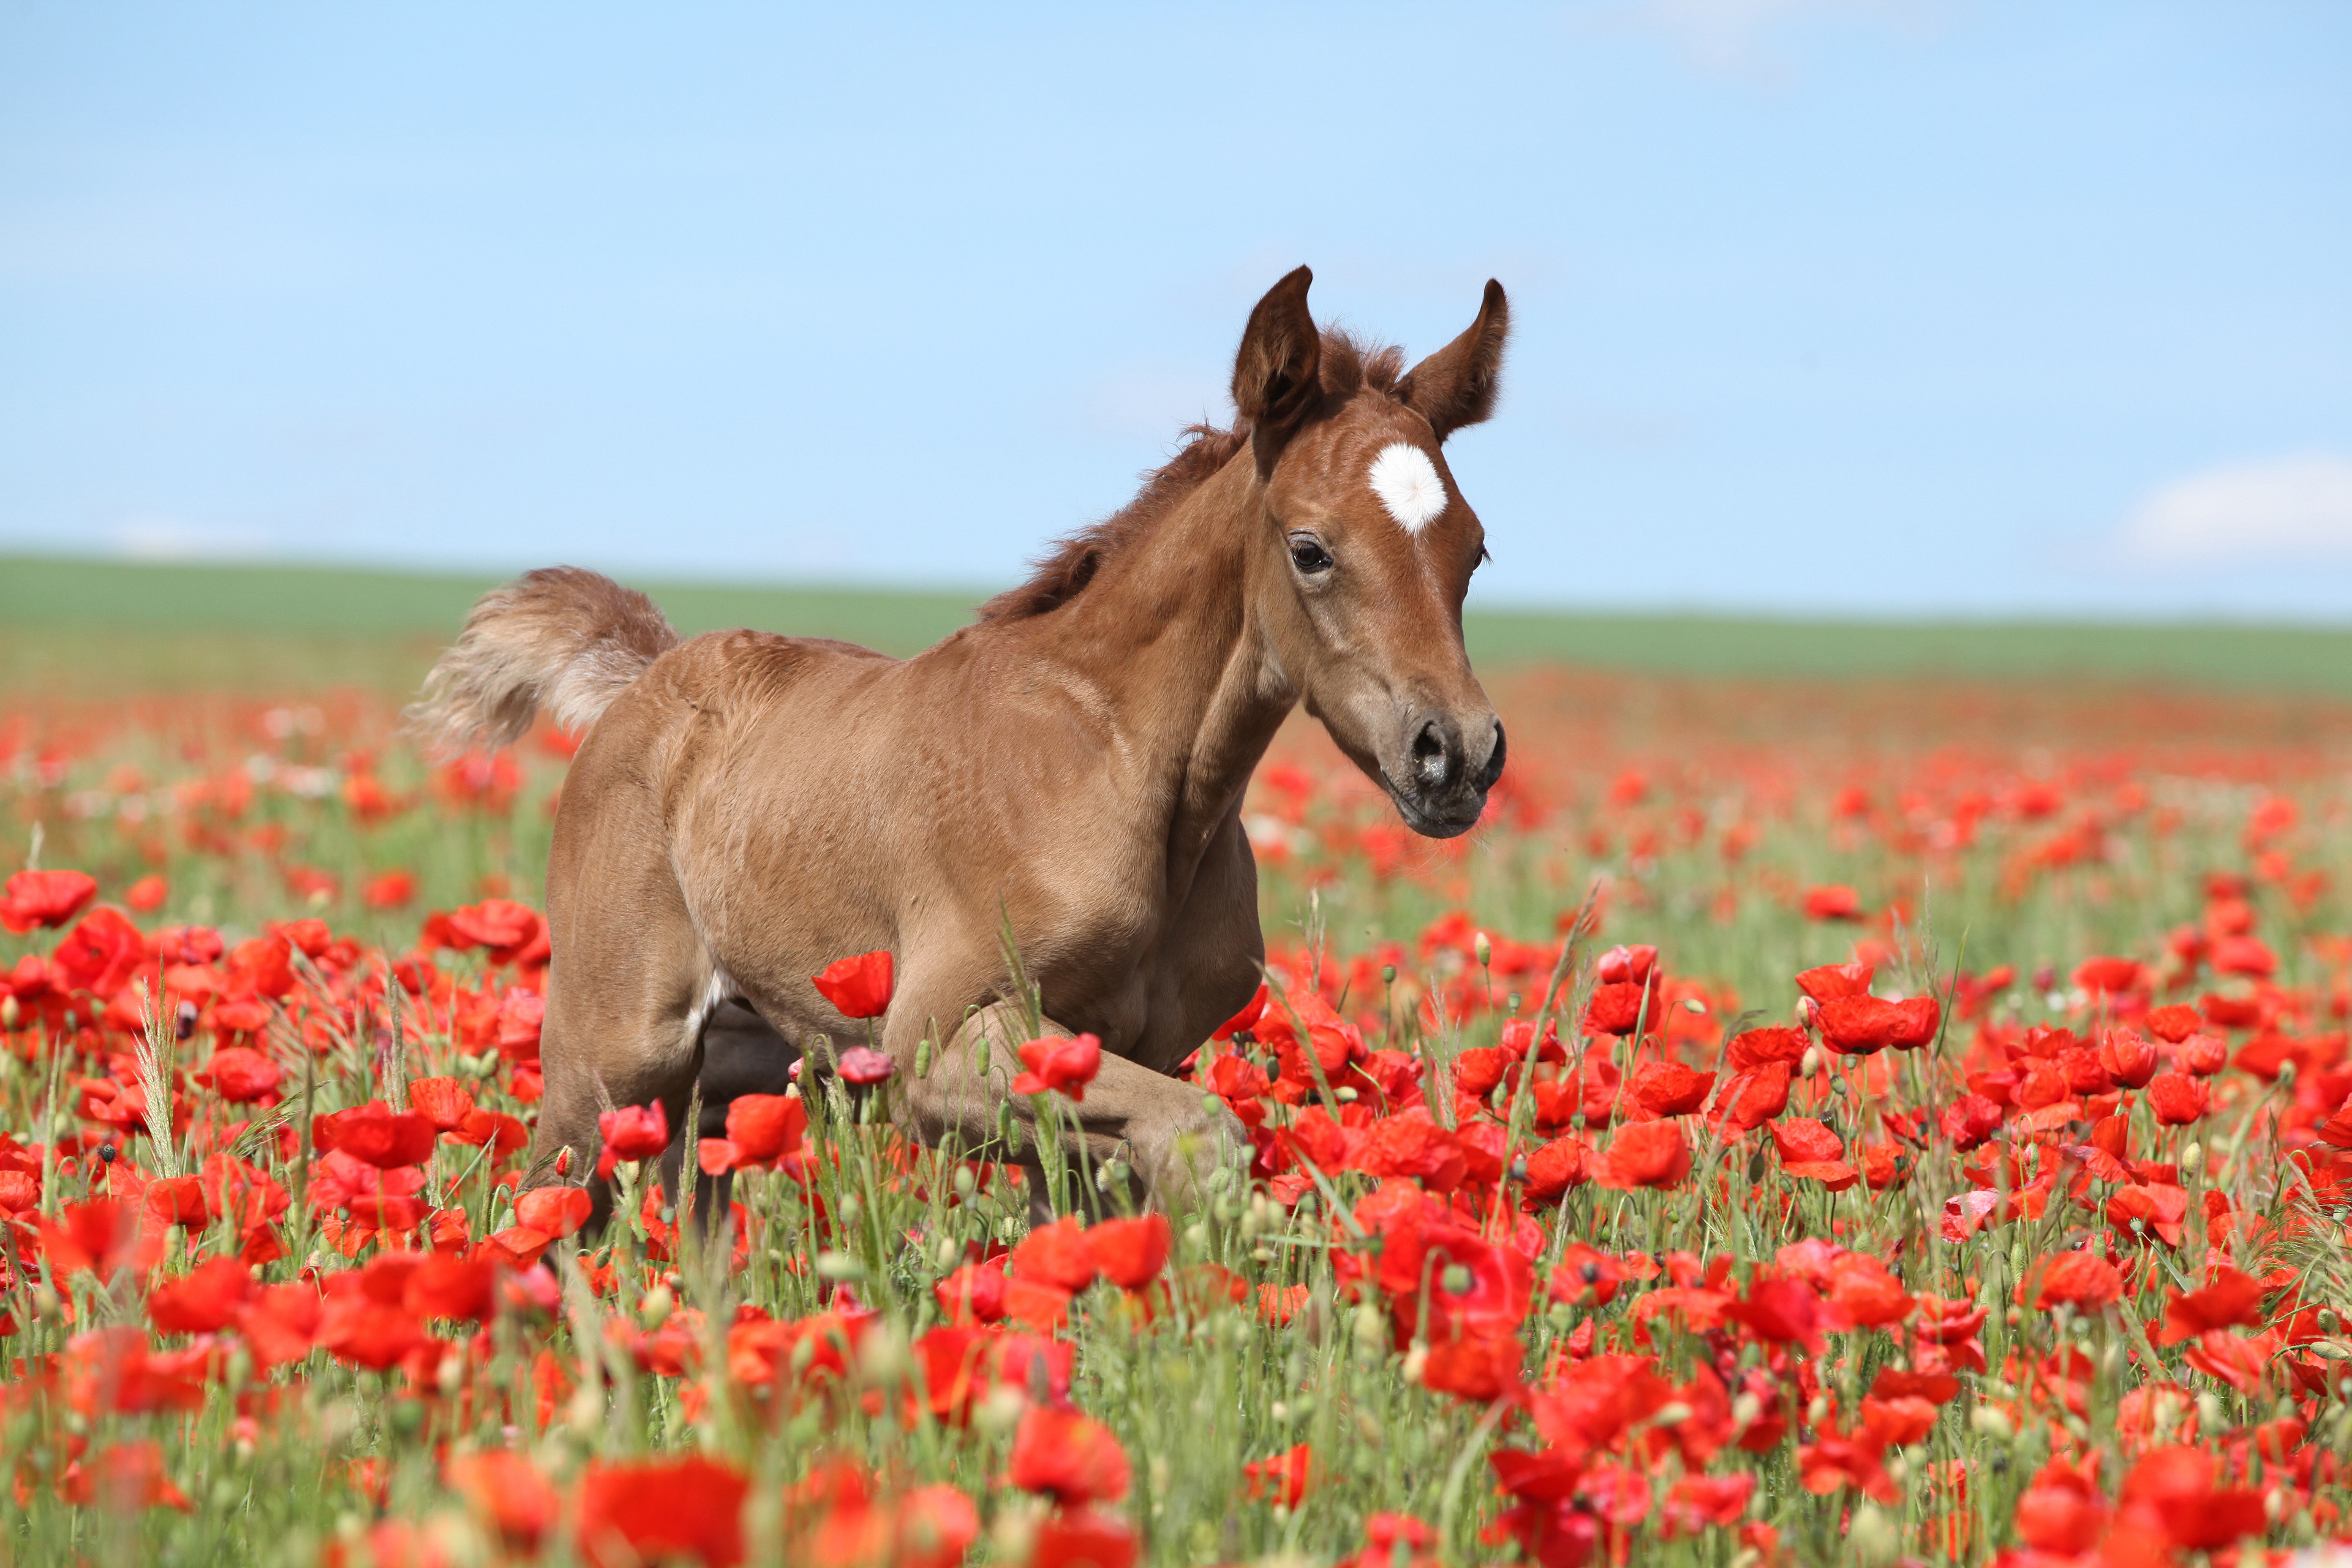 924616 descargar imagen animales, caballo, bebe animal, flor, potro, amapola, flor roja, verano: fondos de pantalla y protectores de pantalla gratis